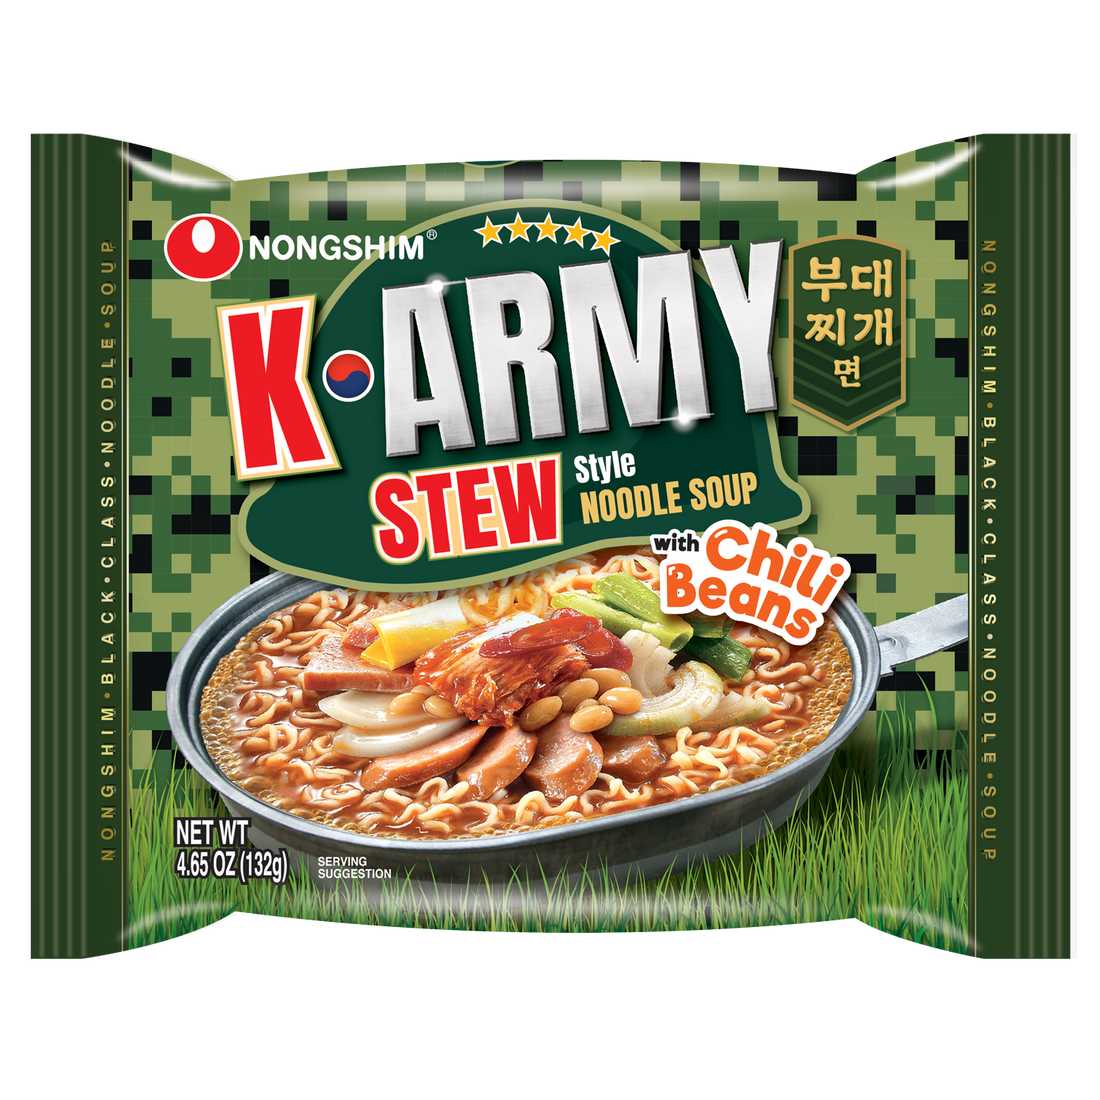 Nongshim K-Army Stew Ramen Noodle Bag, Chili Beans - 4 Pack